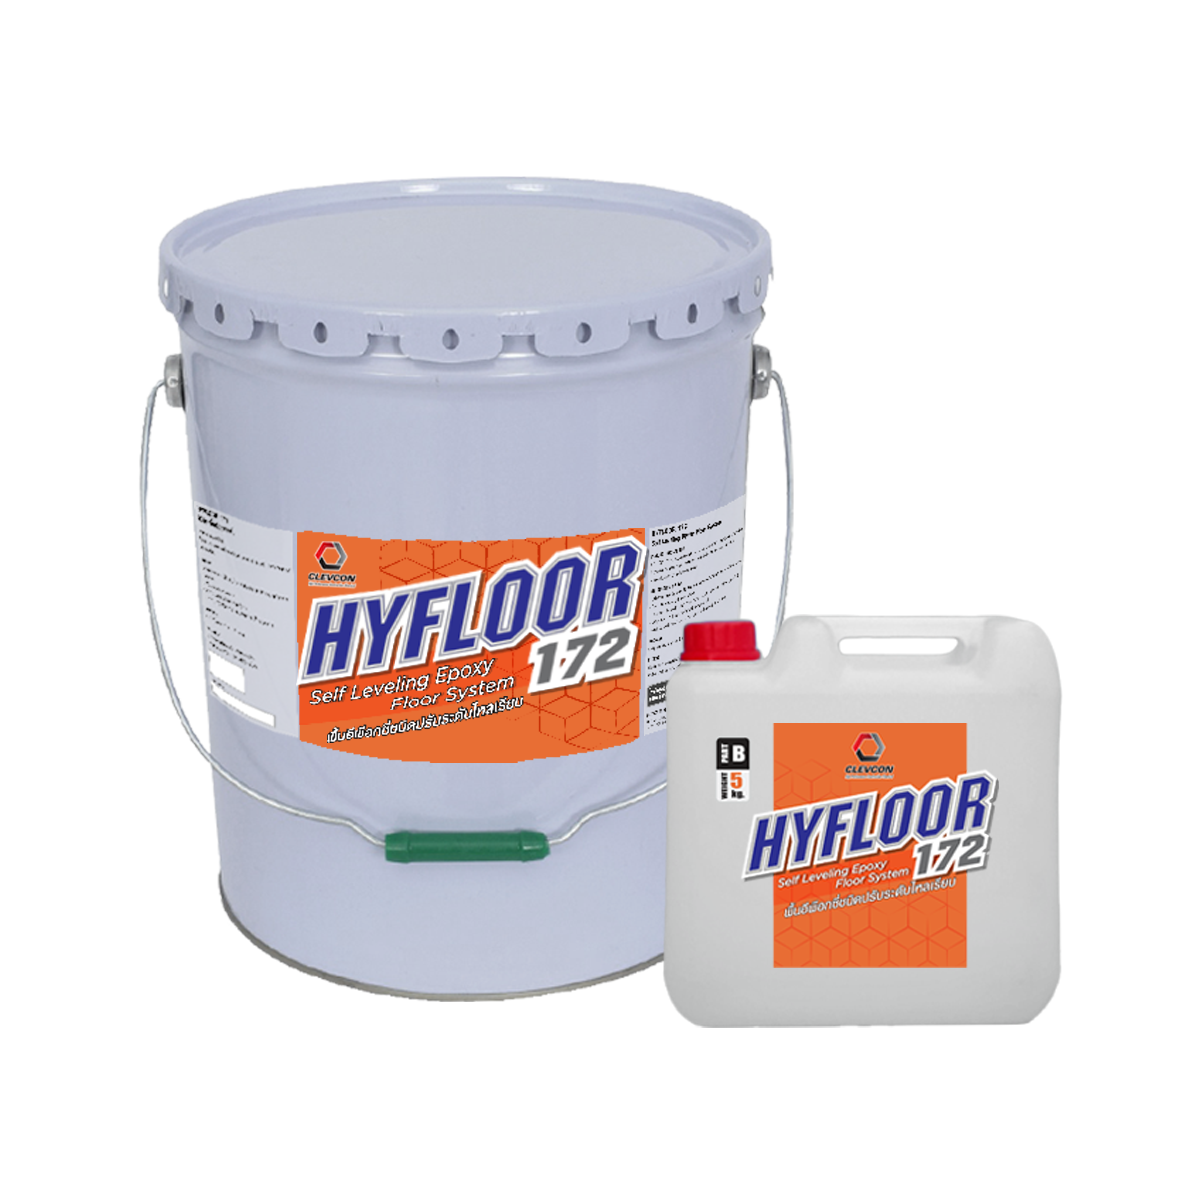 HYFLOOR 172SL Self Leveling Epoxy Floor สีอีพ๊อกซี่งานพื้นชนิดปรับระดับไหลเรียบ